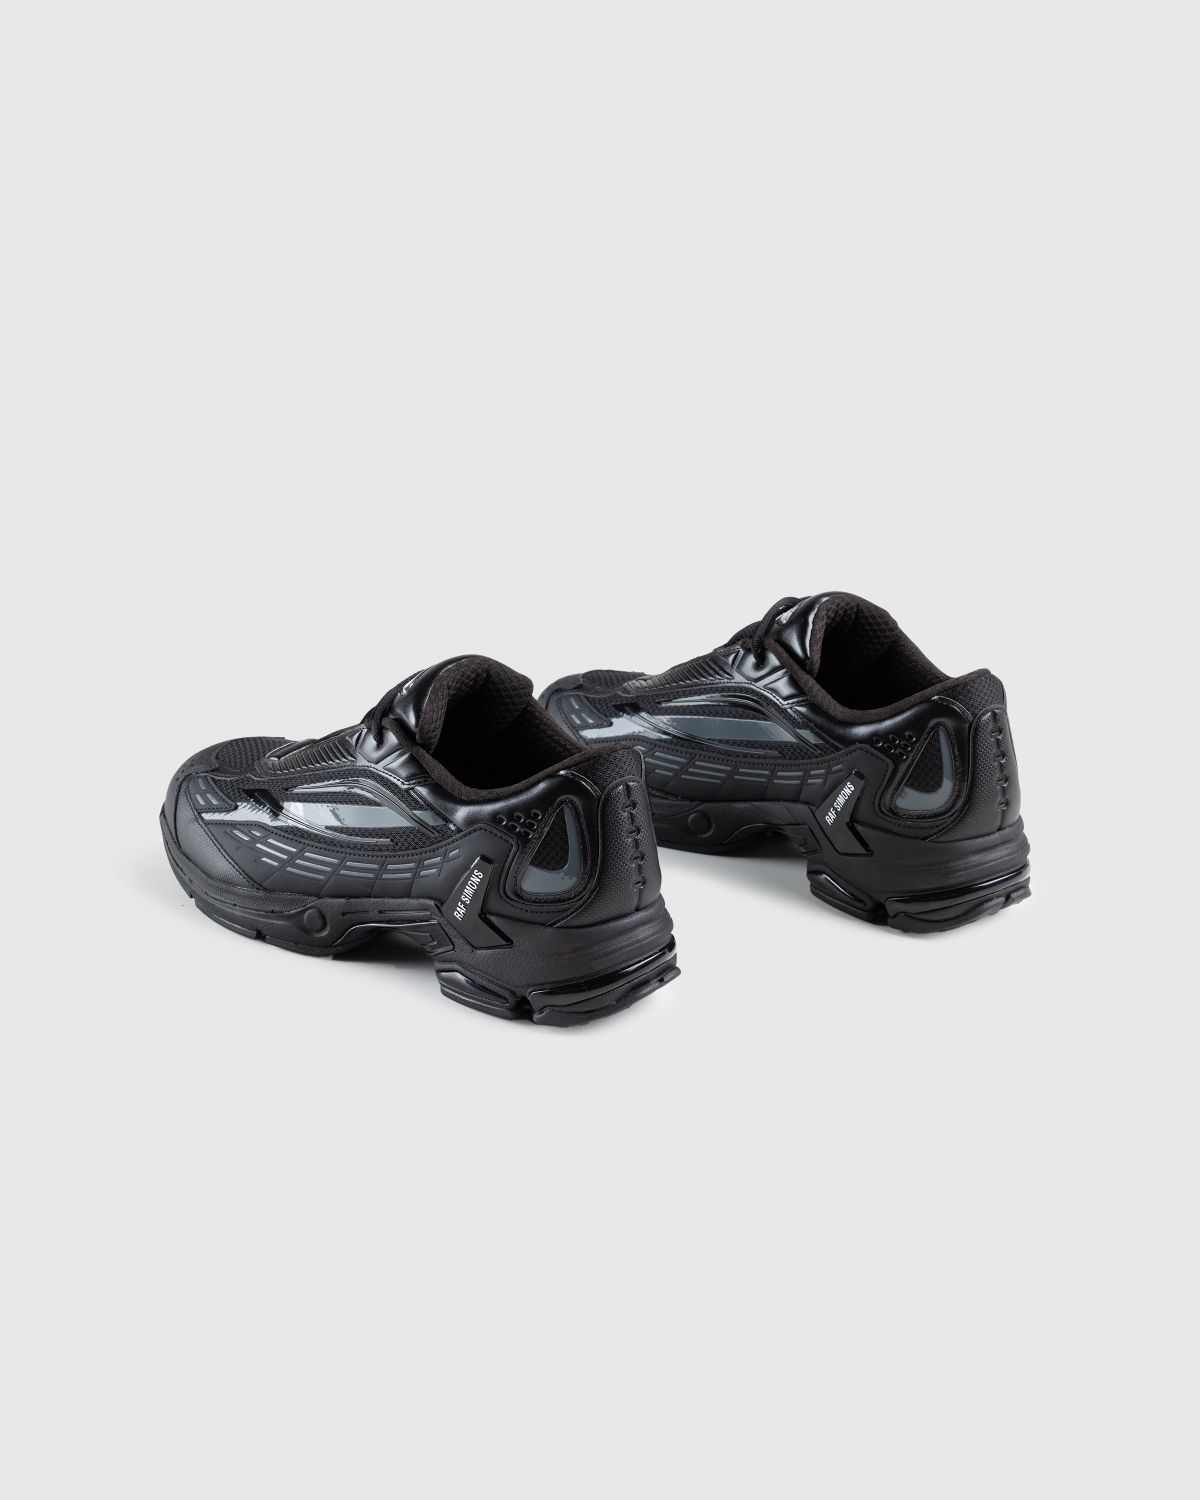 Raf Simons – Ultrasceptre Sneaker Black - Sneakers - Black - Image 4